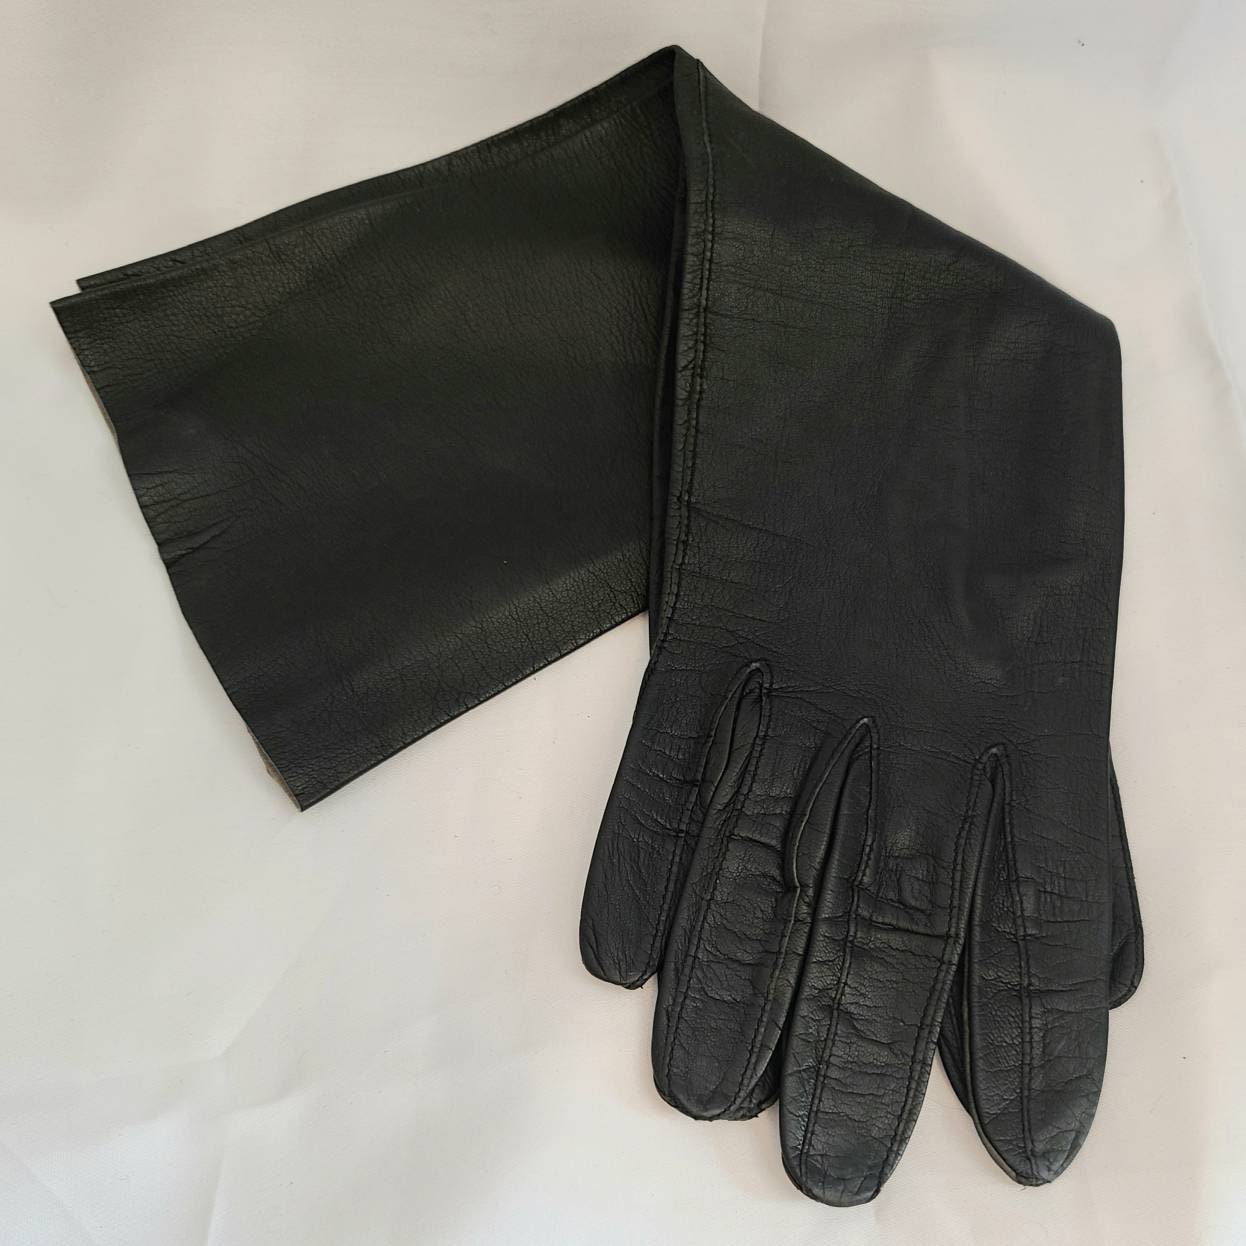 Vintage Leather Gloves 1950s Long Black Thin Kid Leather Gloves Hemphill Wells Made in France Elegant Fetish 6.5